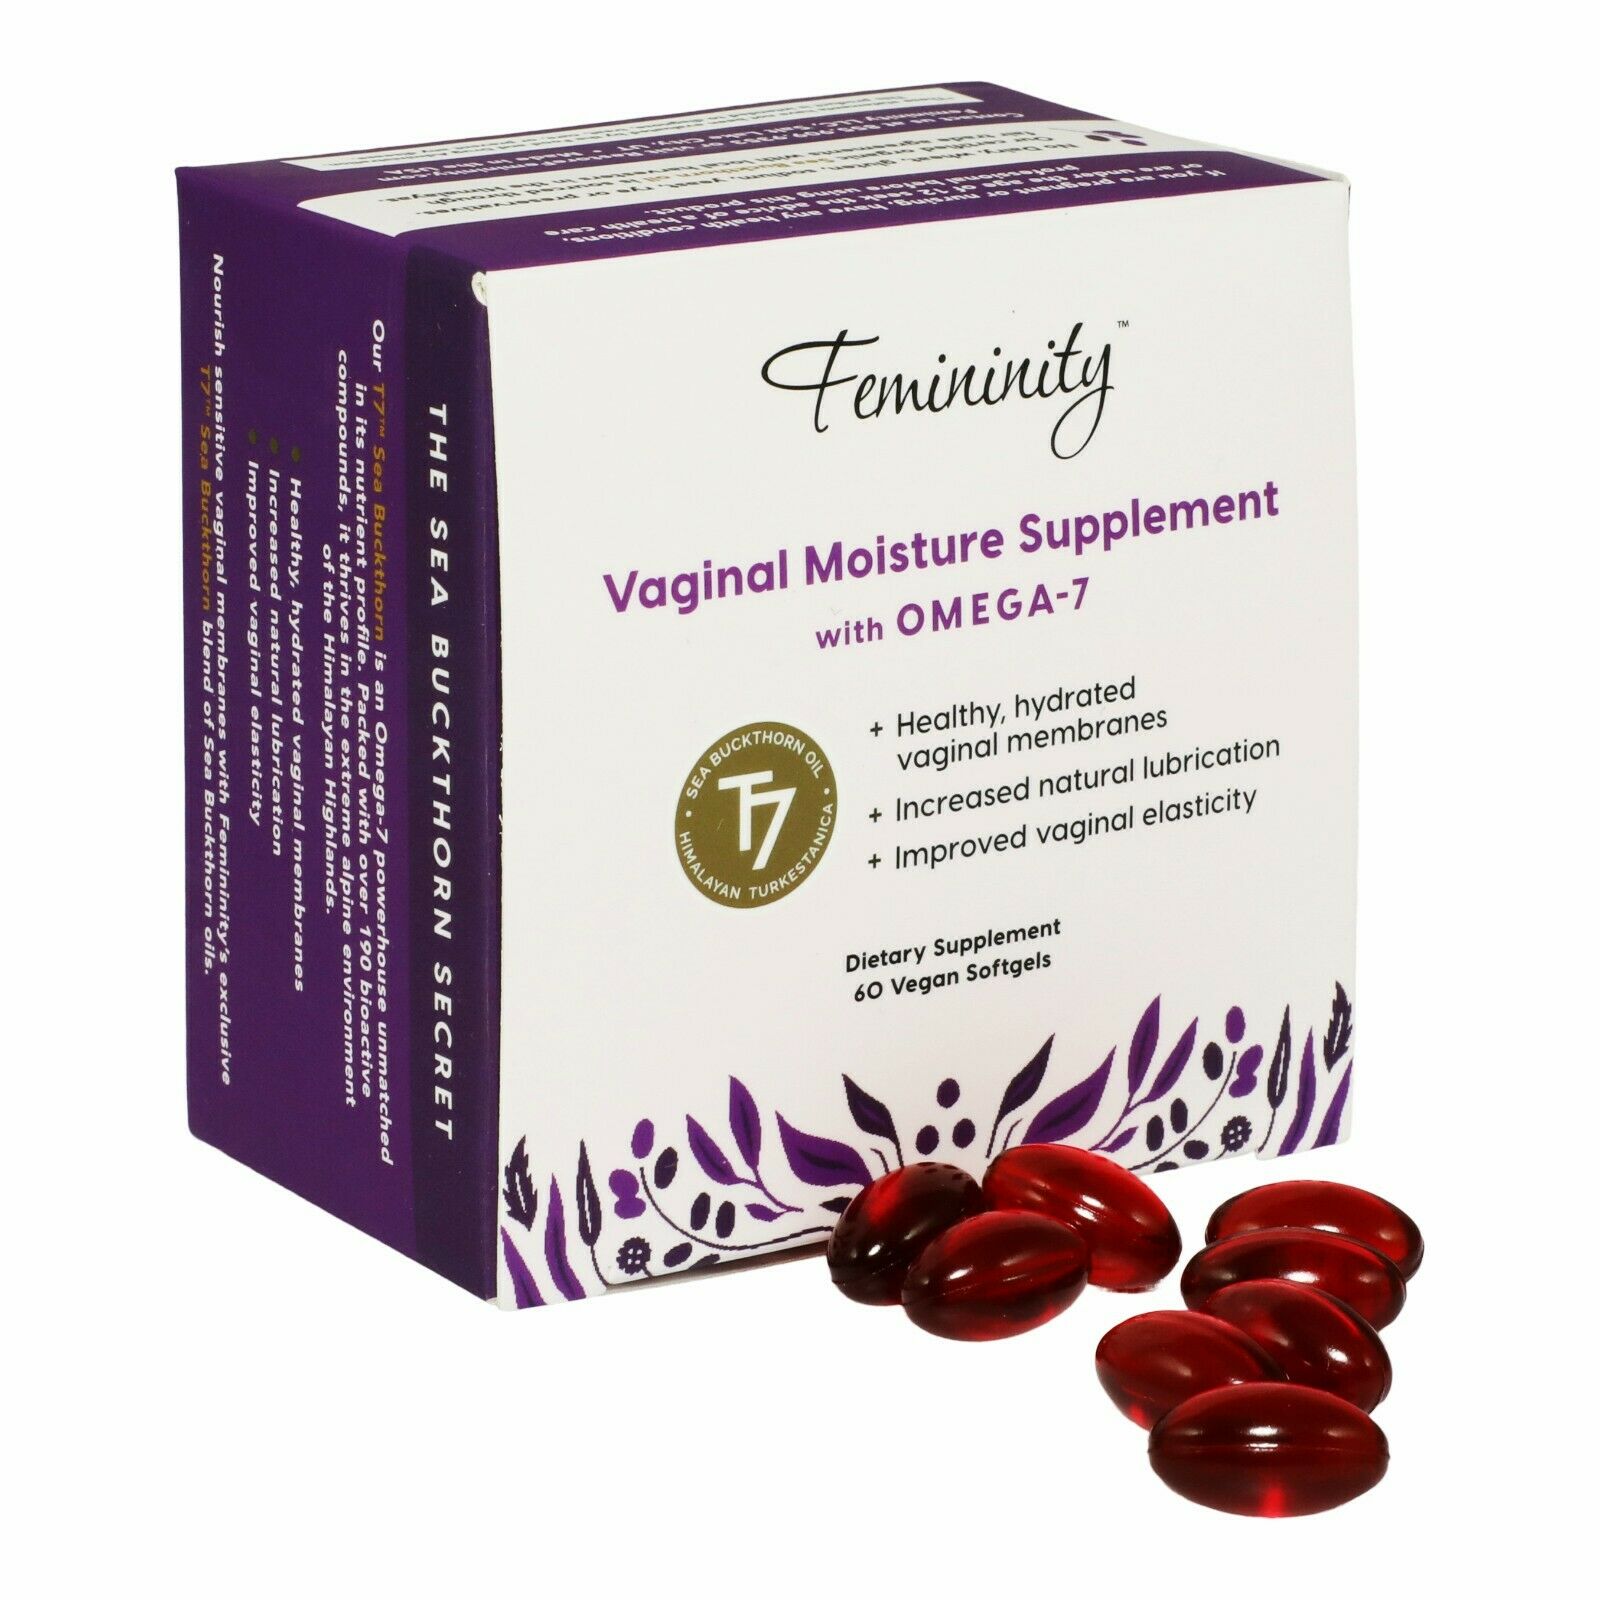 Femininity Vaginal Moisture Omega-7 60 Softgels Vegan